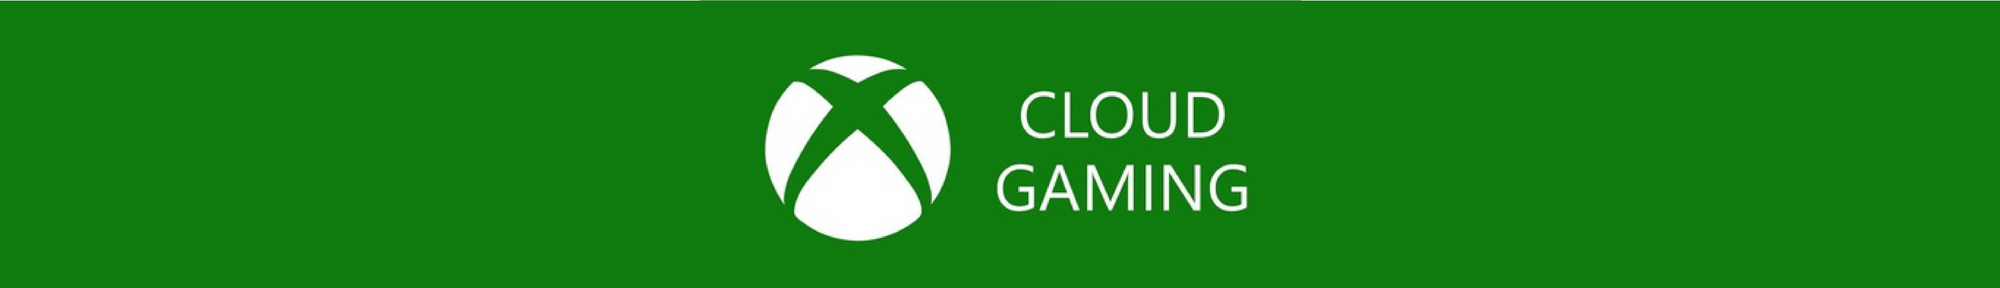 Xbox Cloud Gaming.png